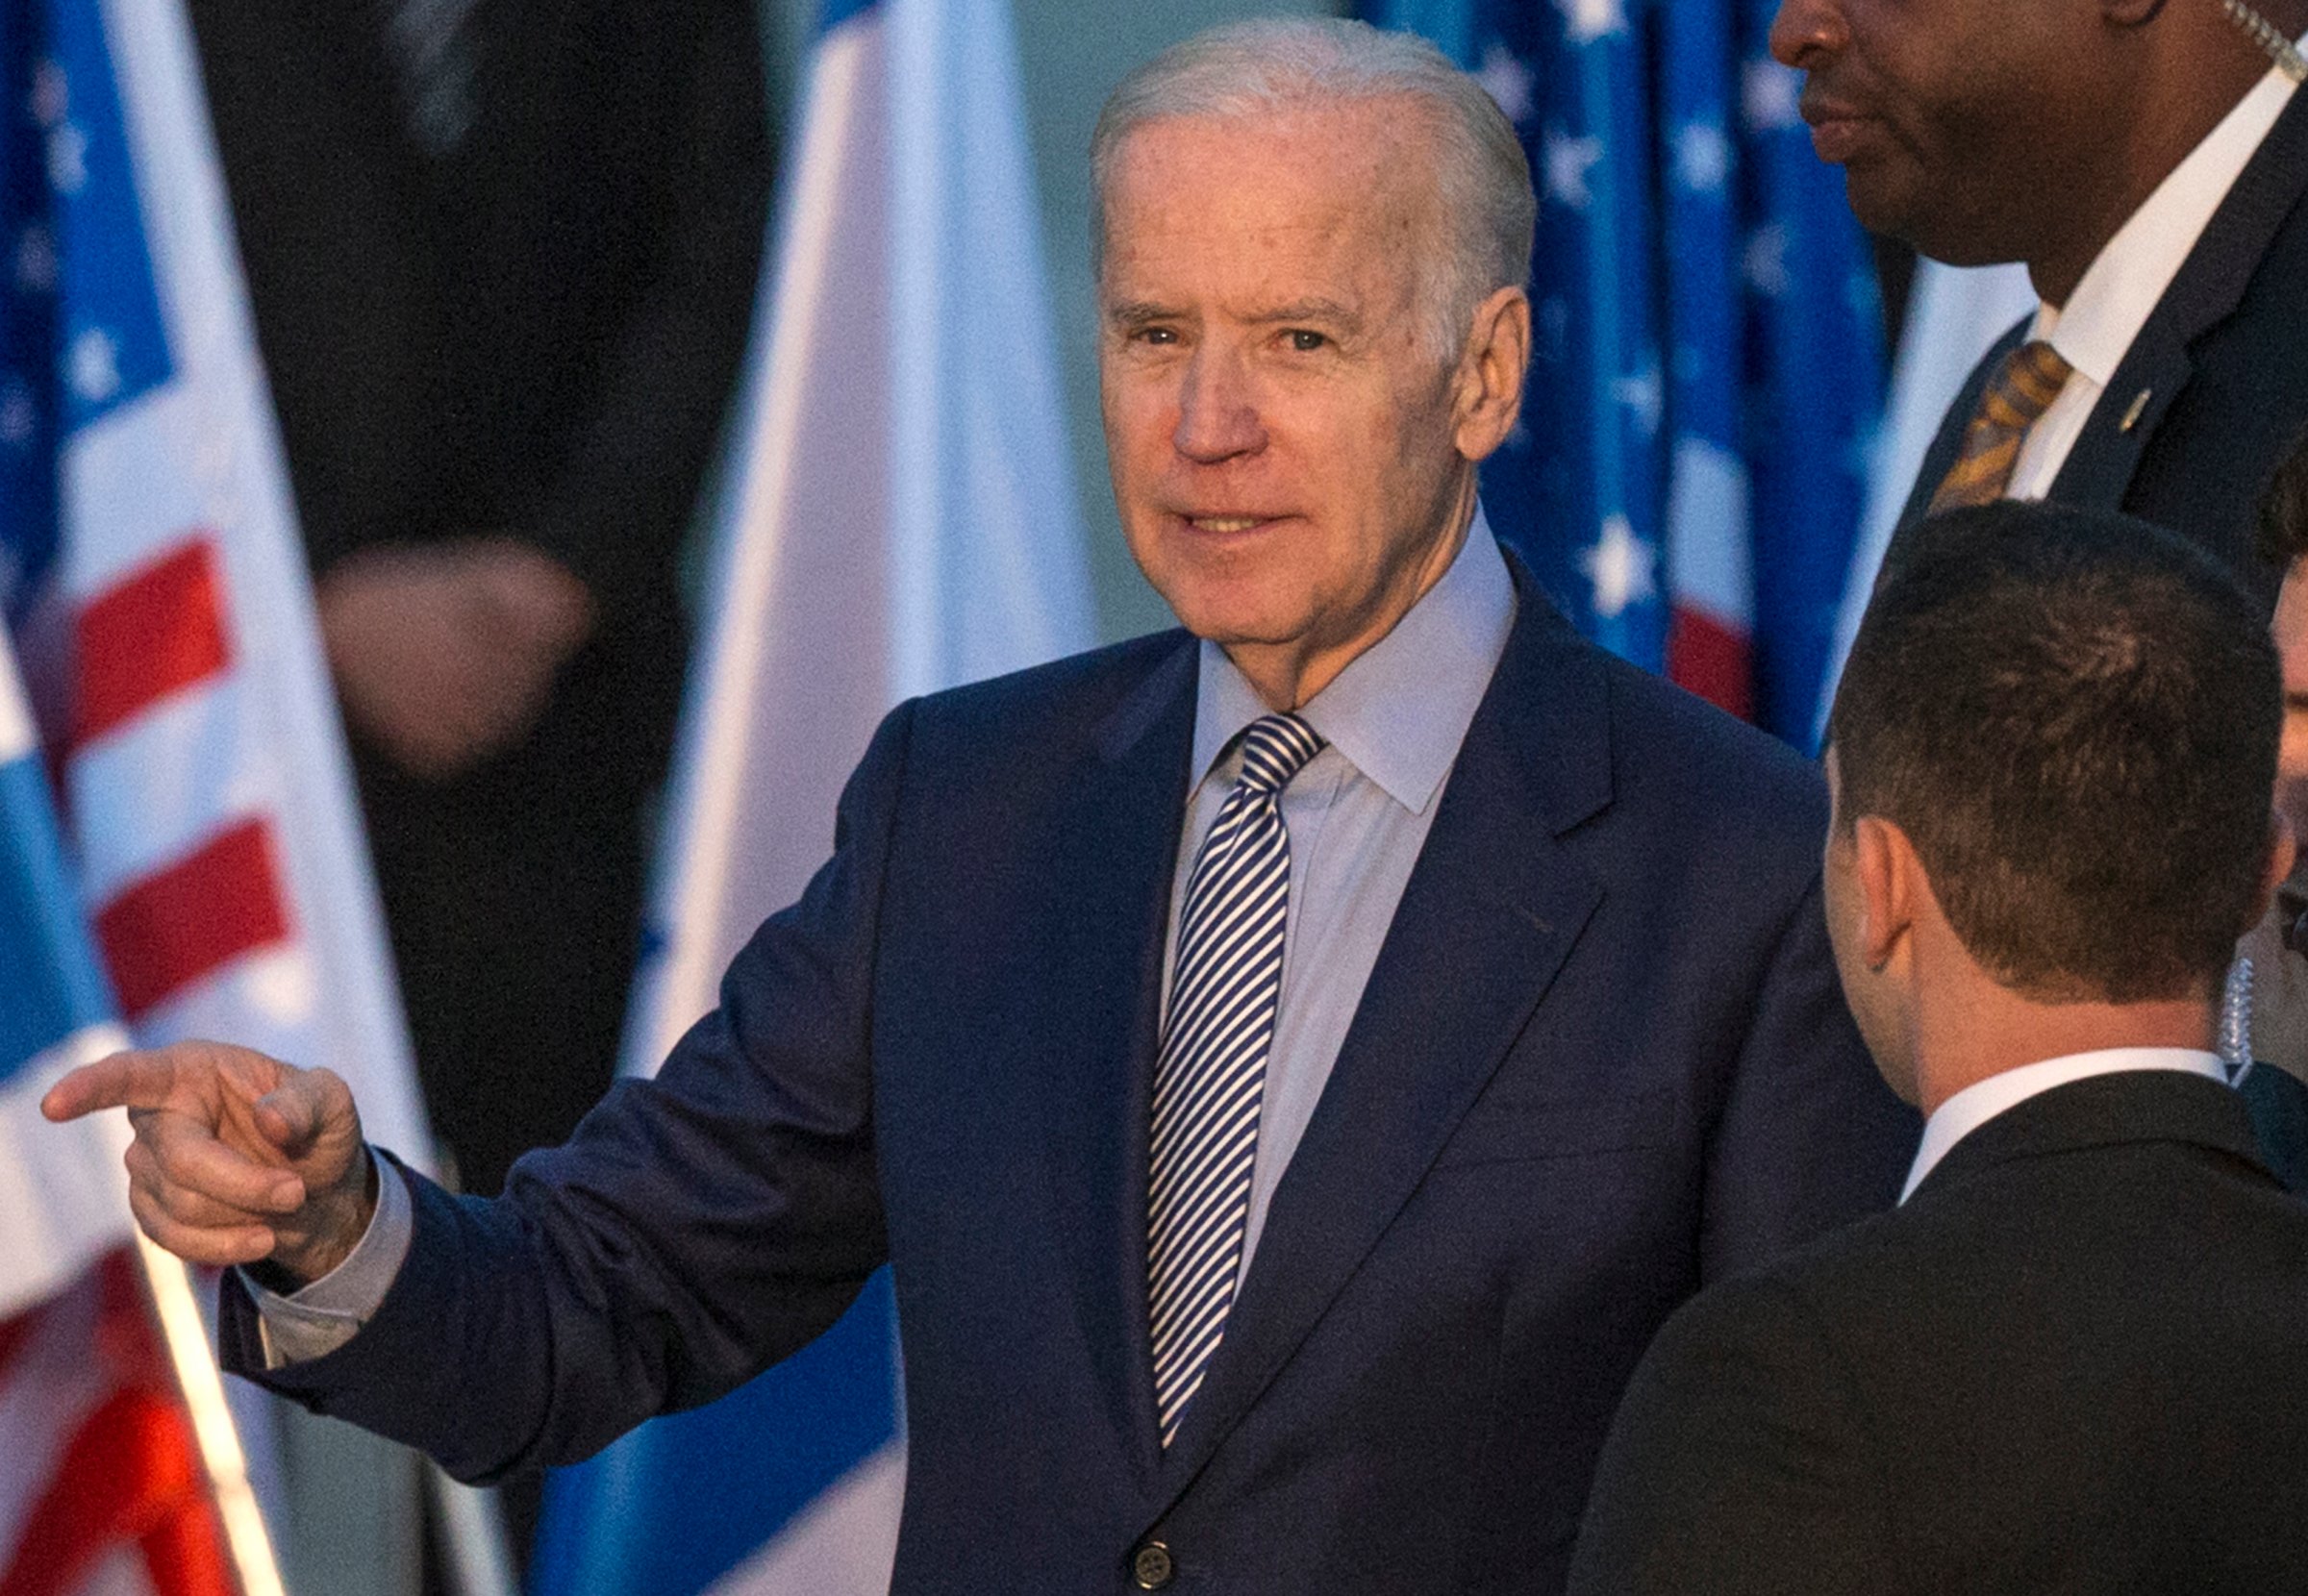 Joe Biden gestures upon his arrival at Israel's Ben Gurion International Airport on March 8, 2016.